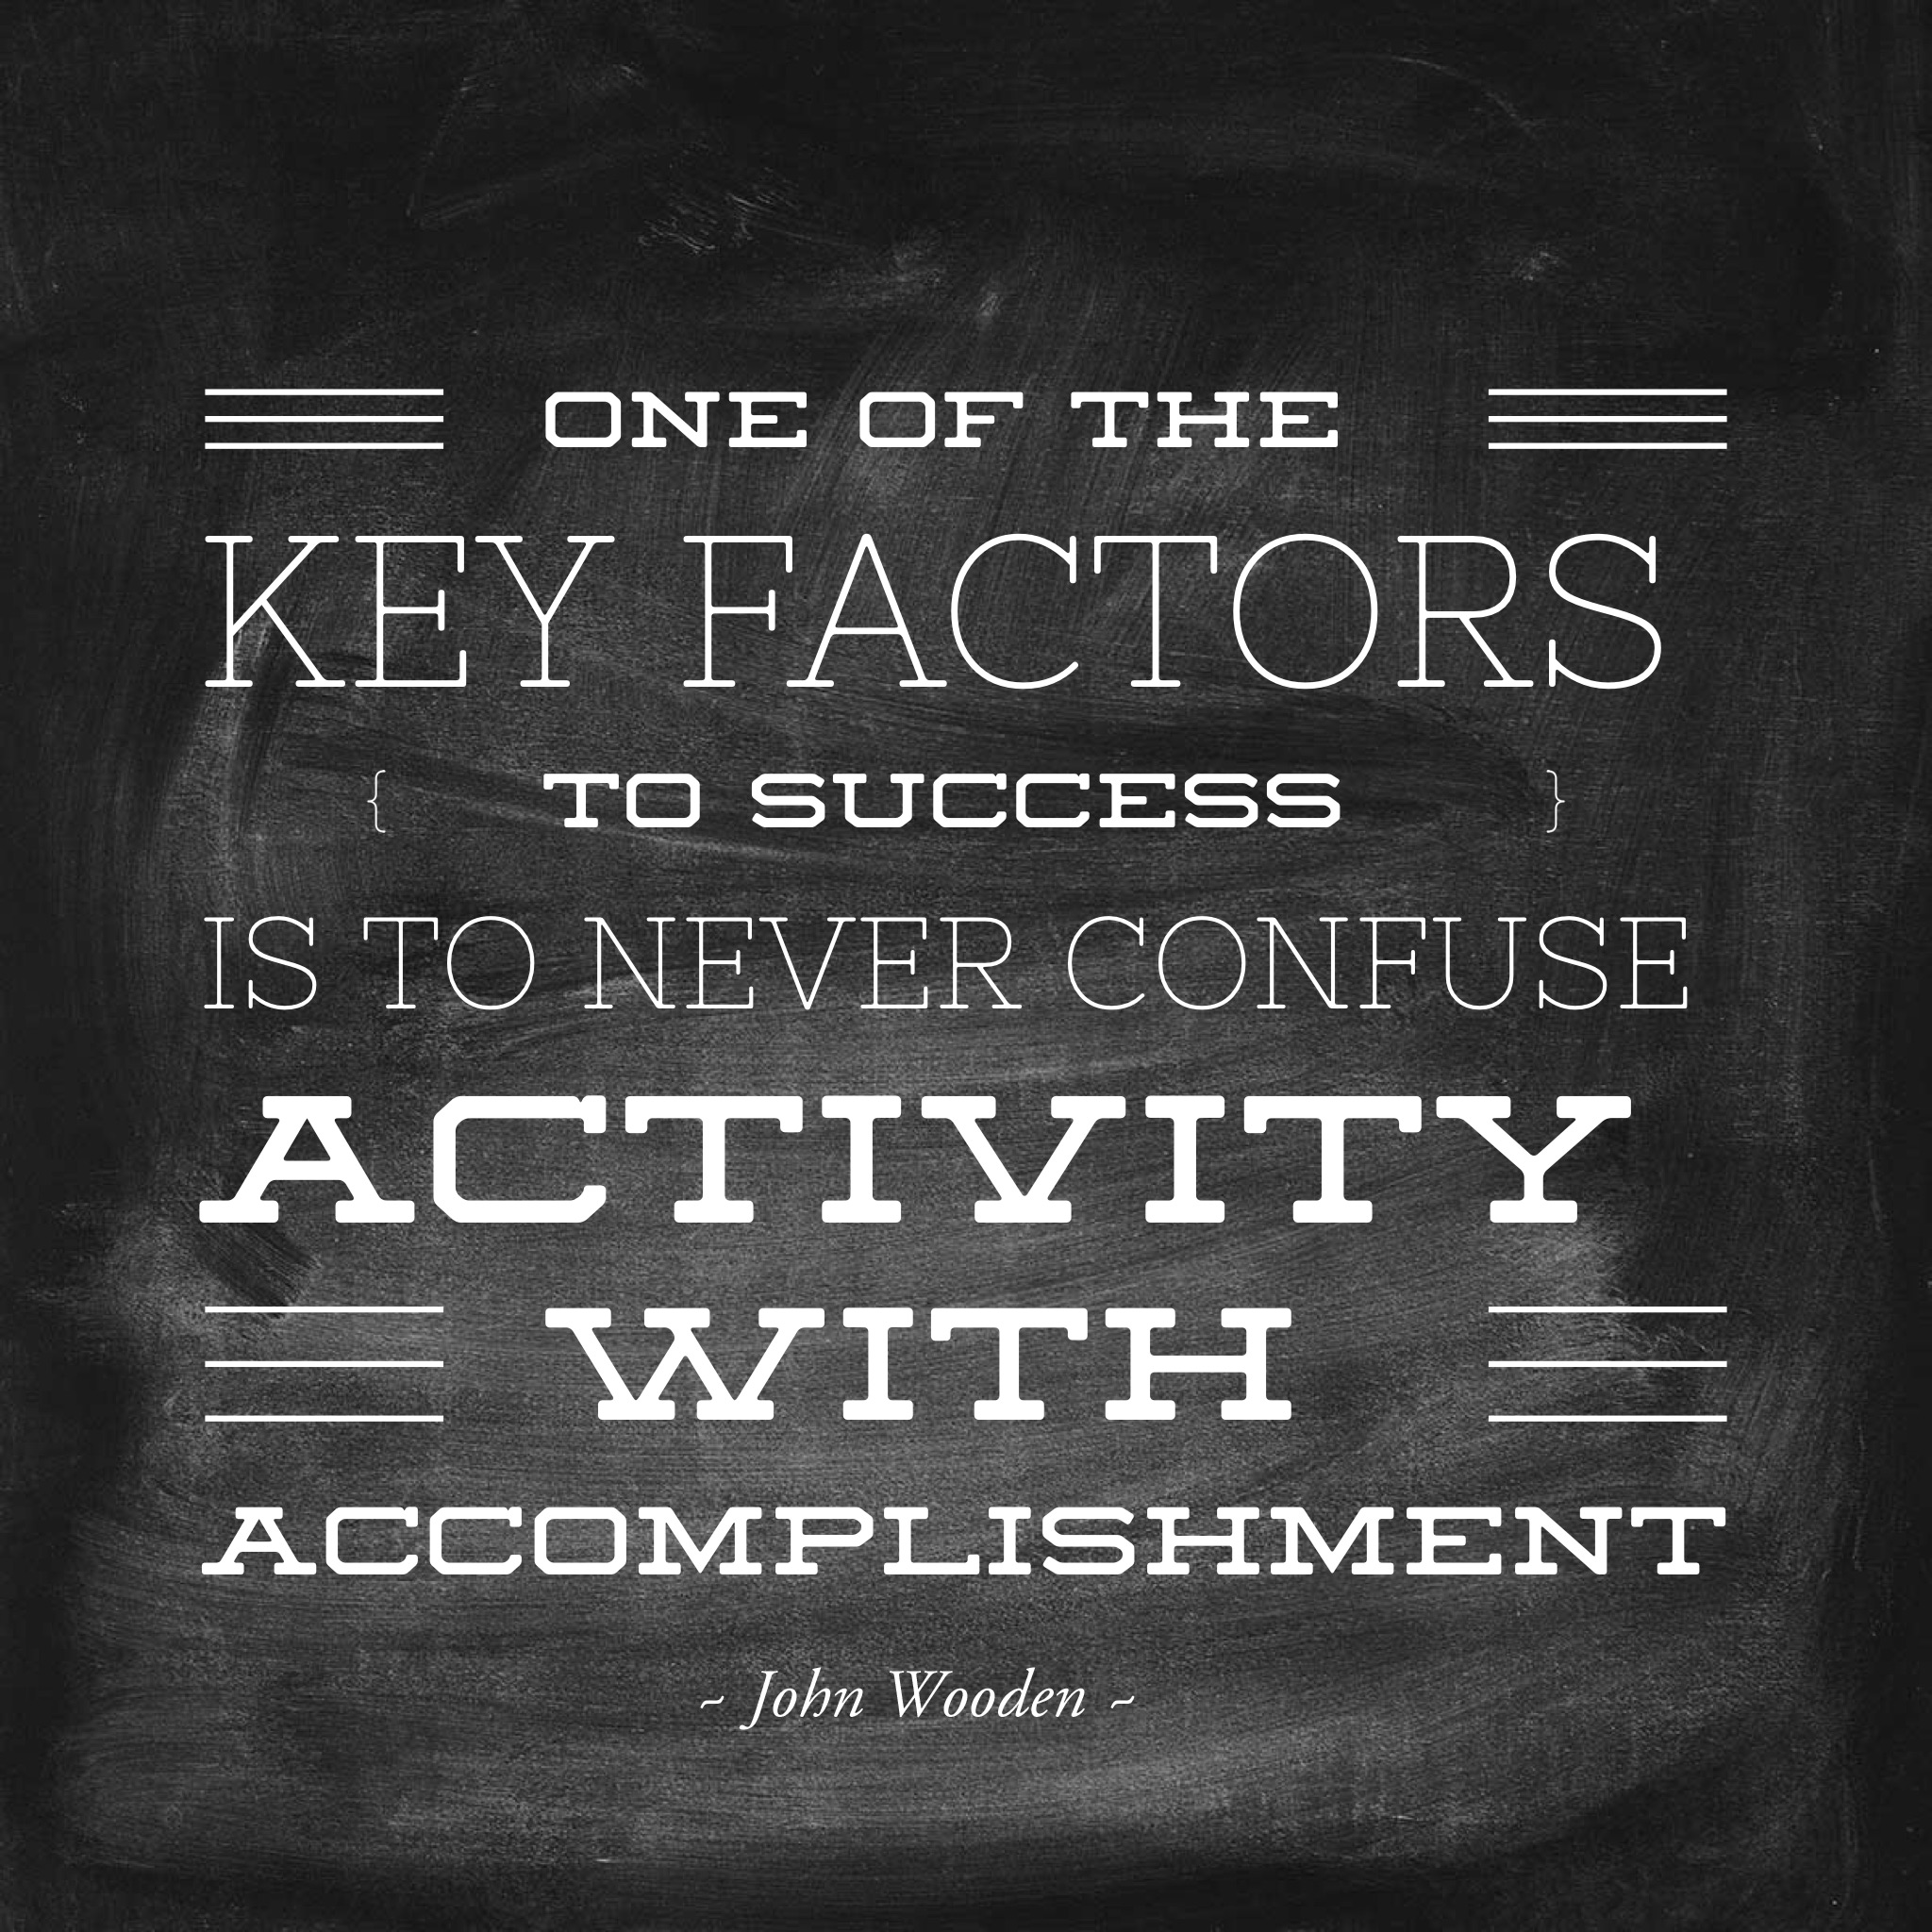 John Wooden on Activity vs Accomplishment